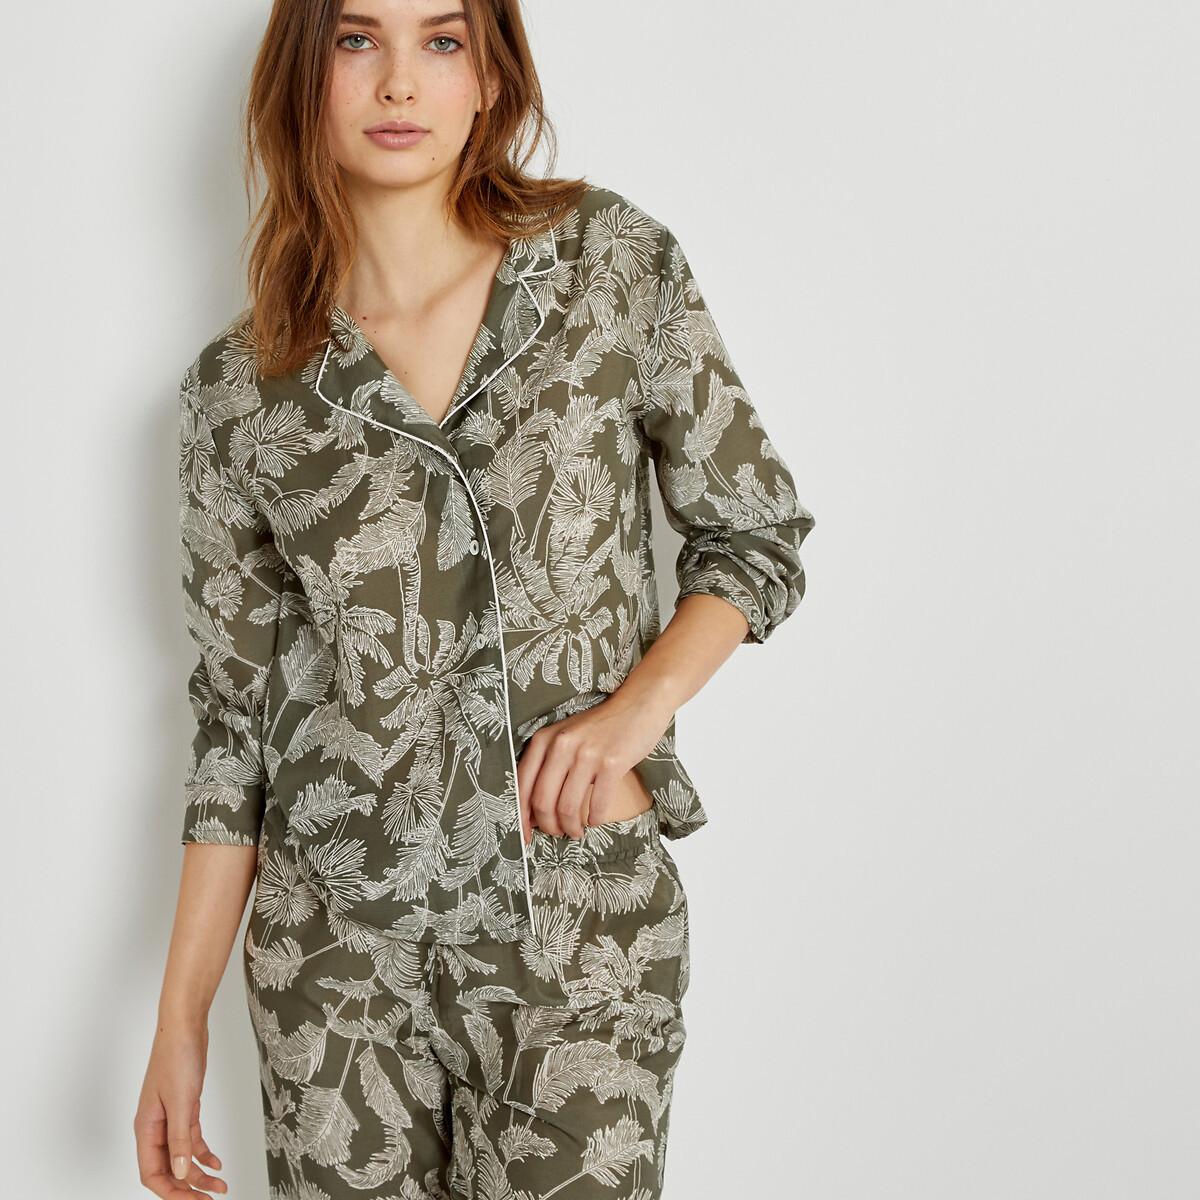 La Redoute Collections  Bedruckter Pyjama im Retro-Stil 